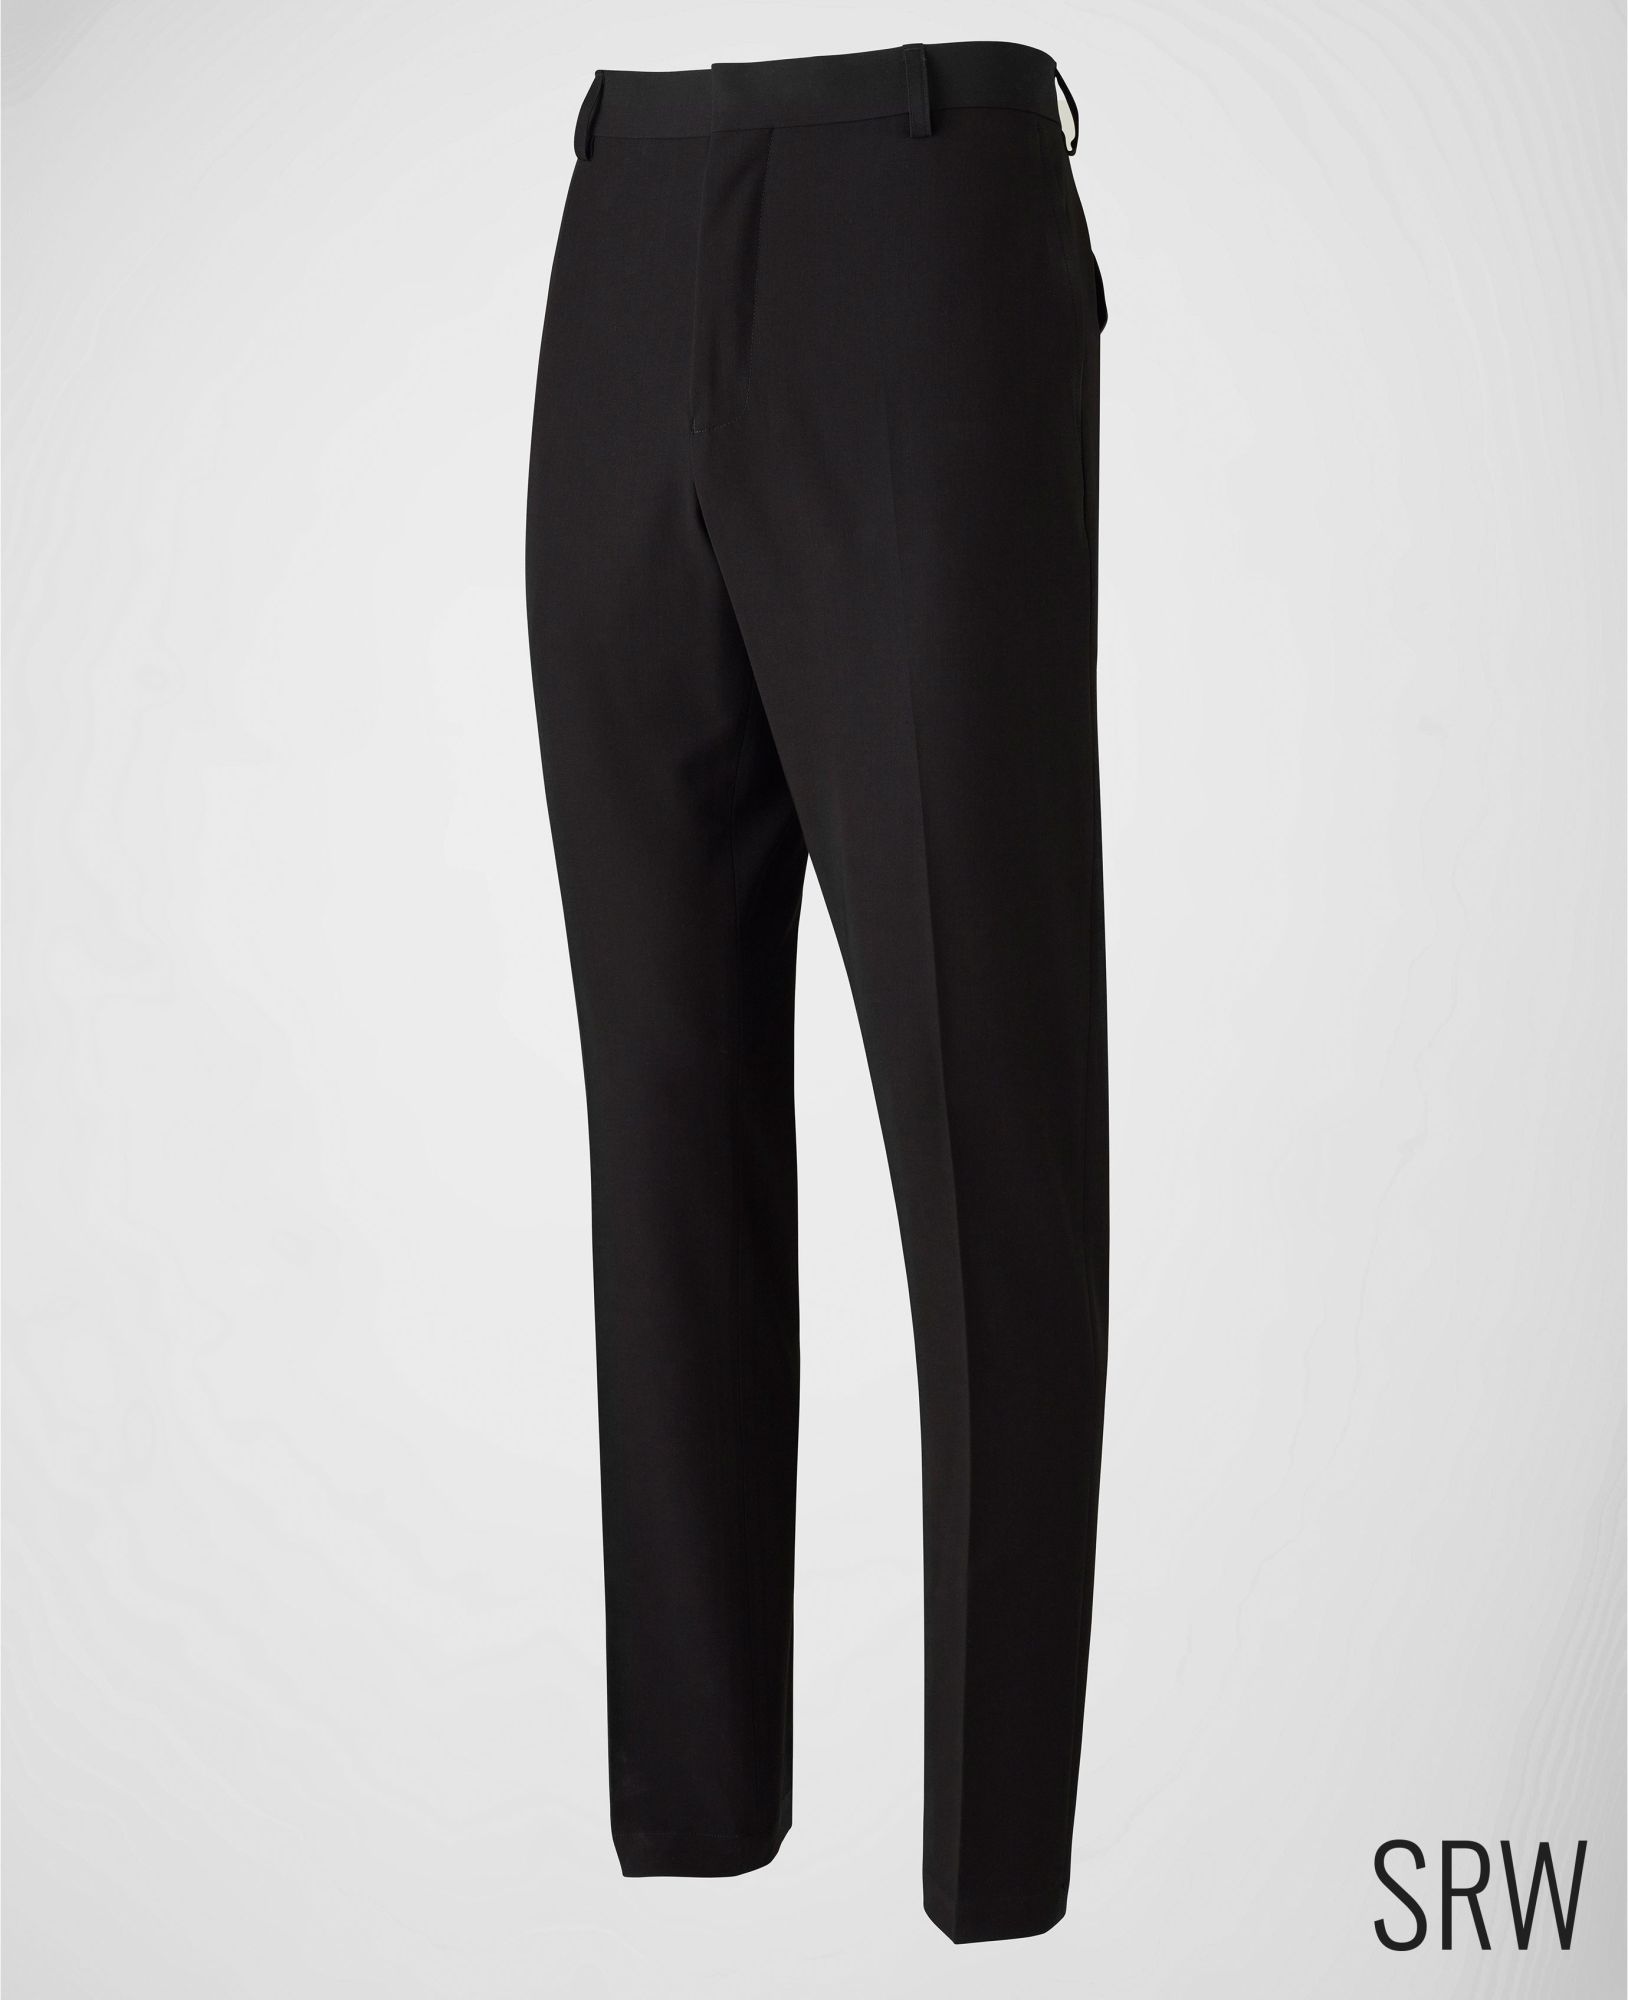 srw active black sweat wicking trousers 30" 32"